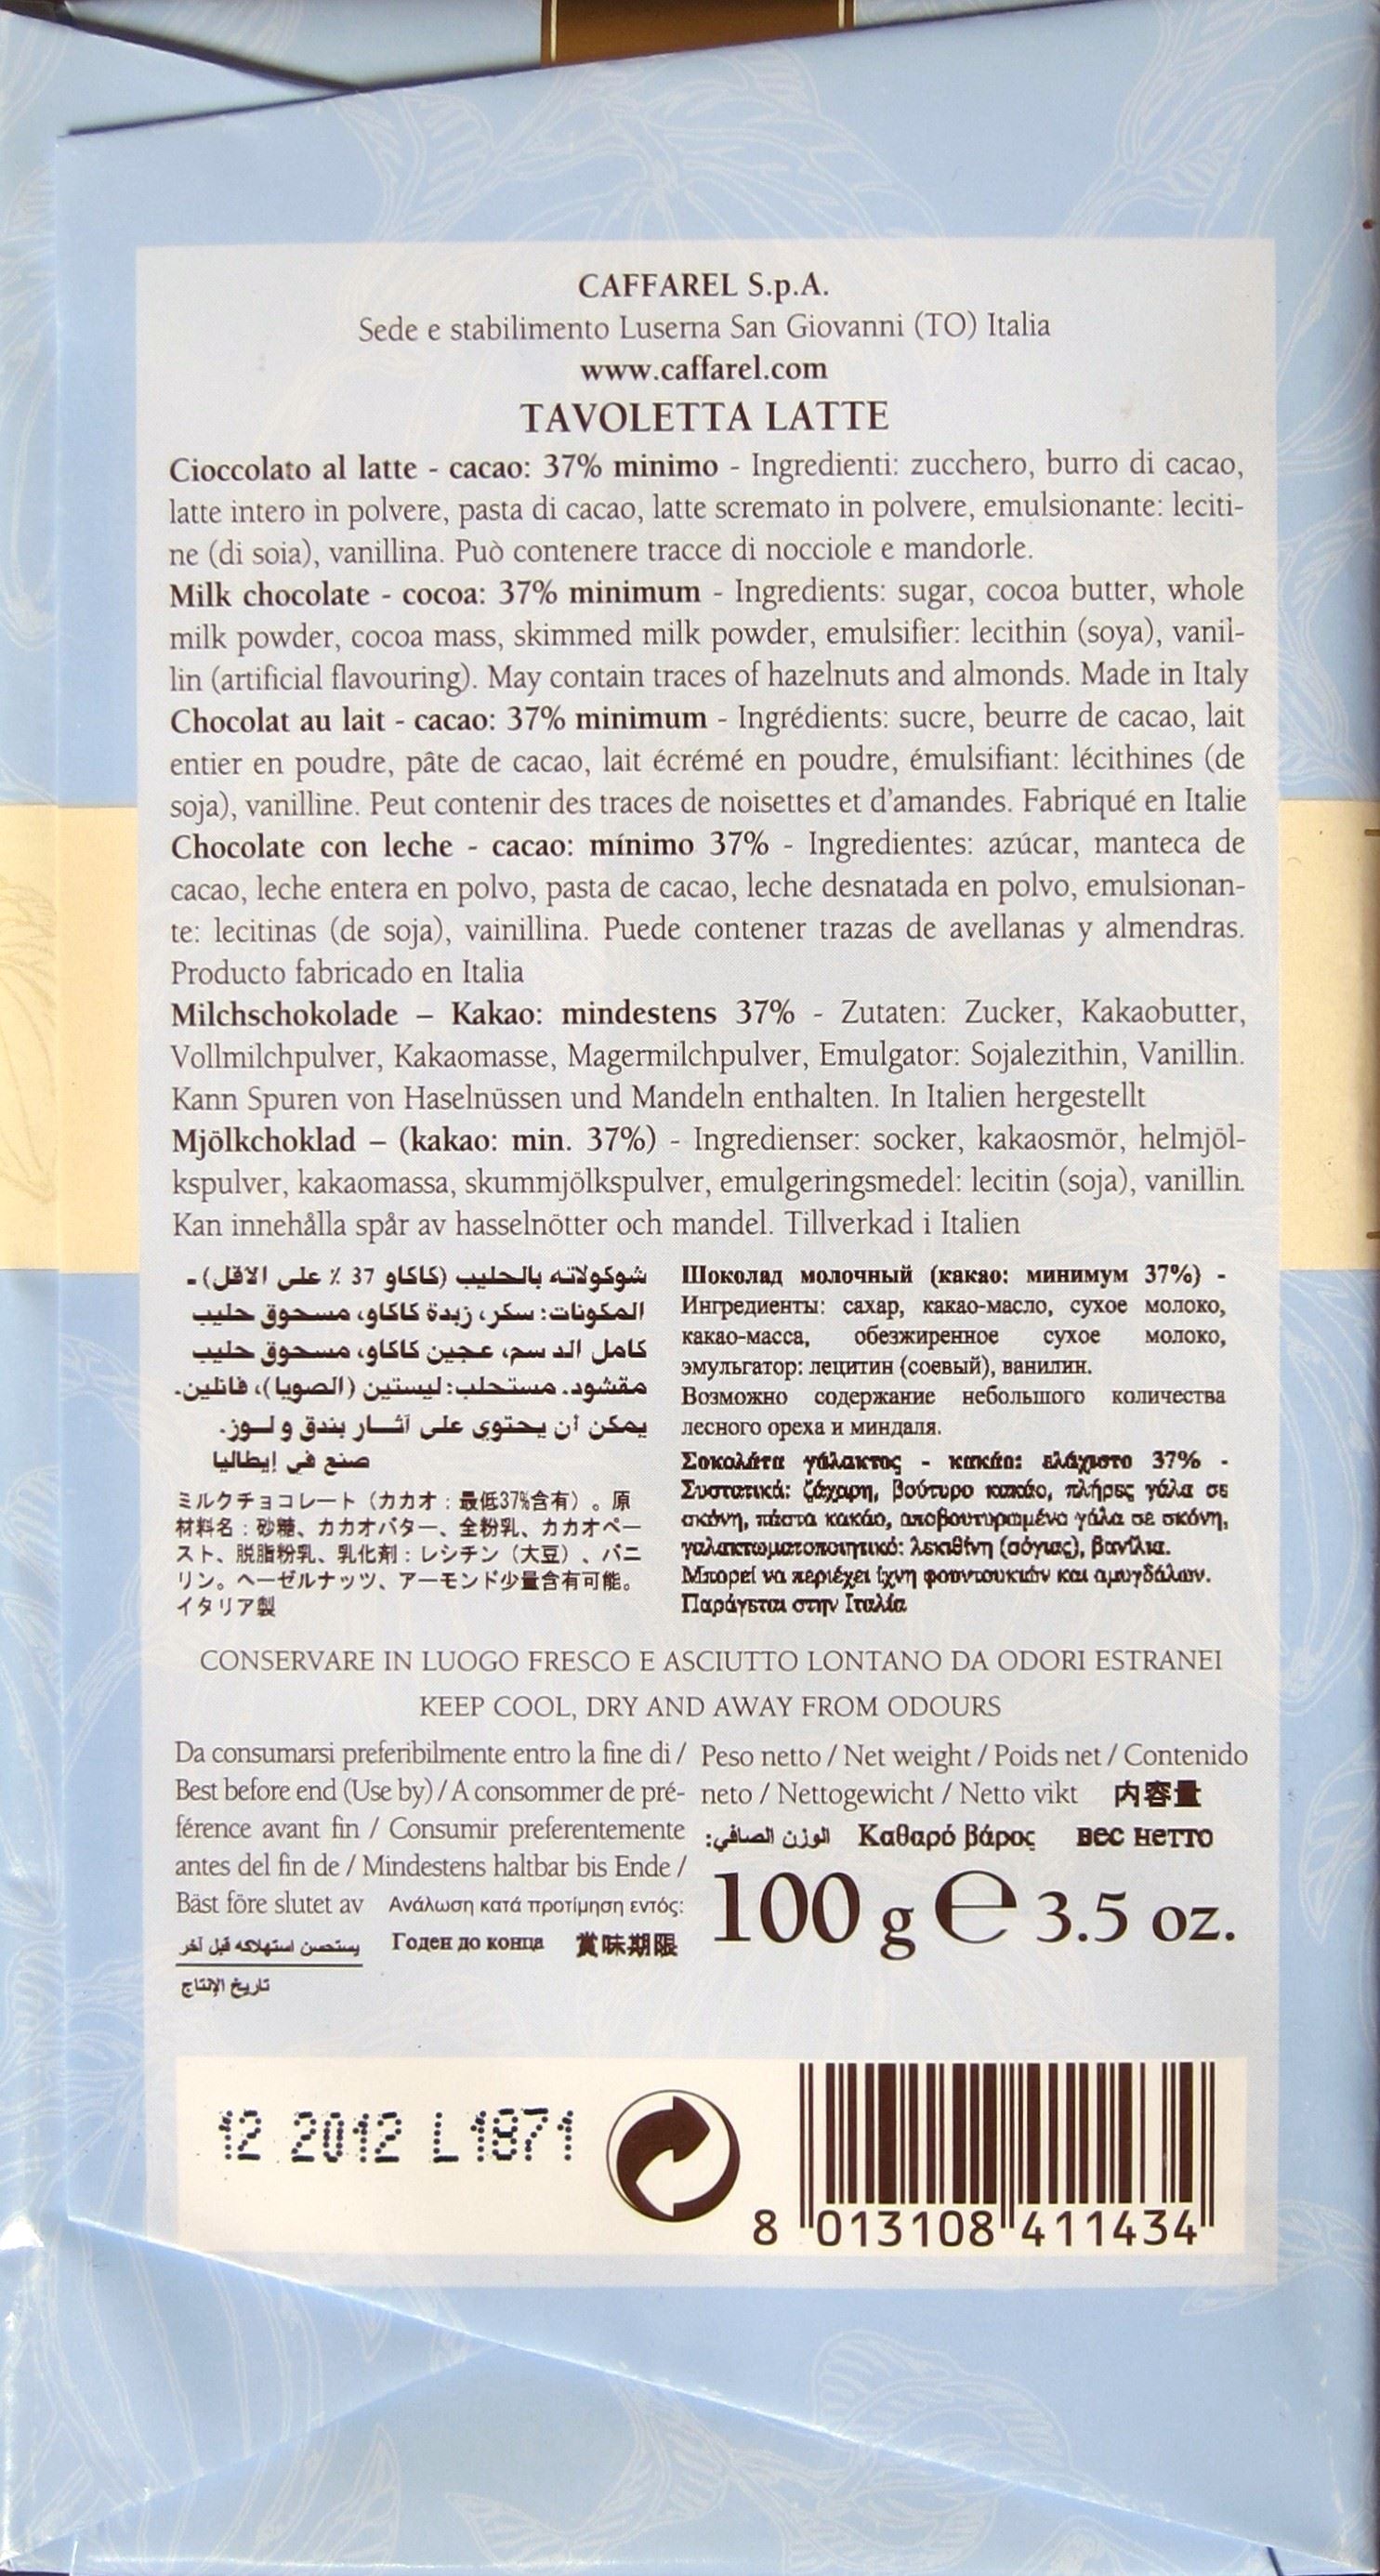 Verpackungsrückseite der Caffarel Puro Cioccolato Latte Milchschokolade